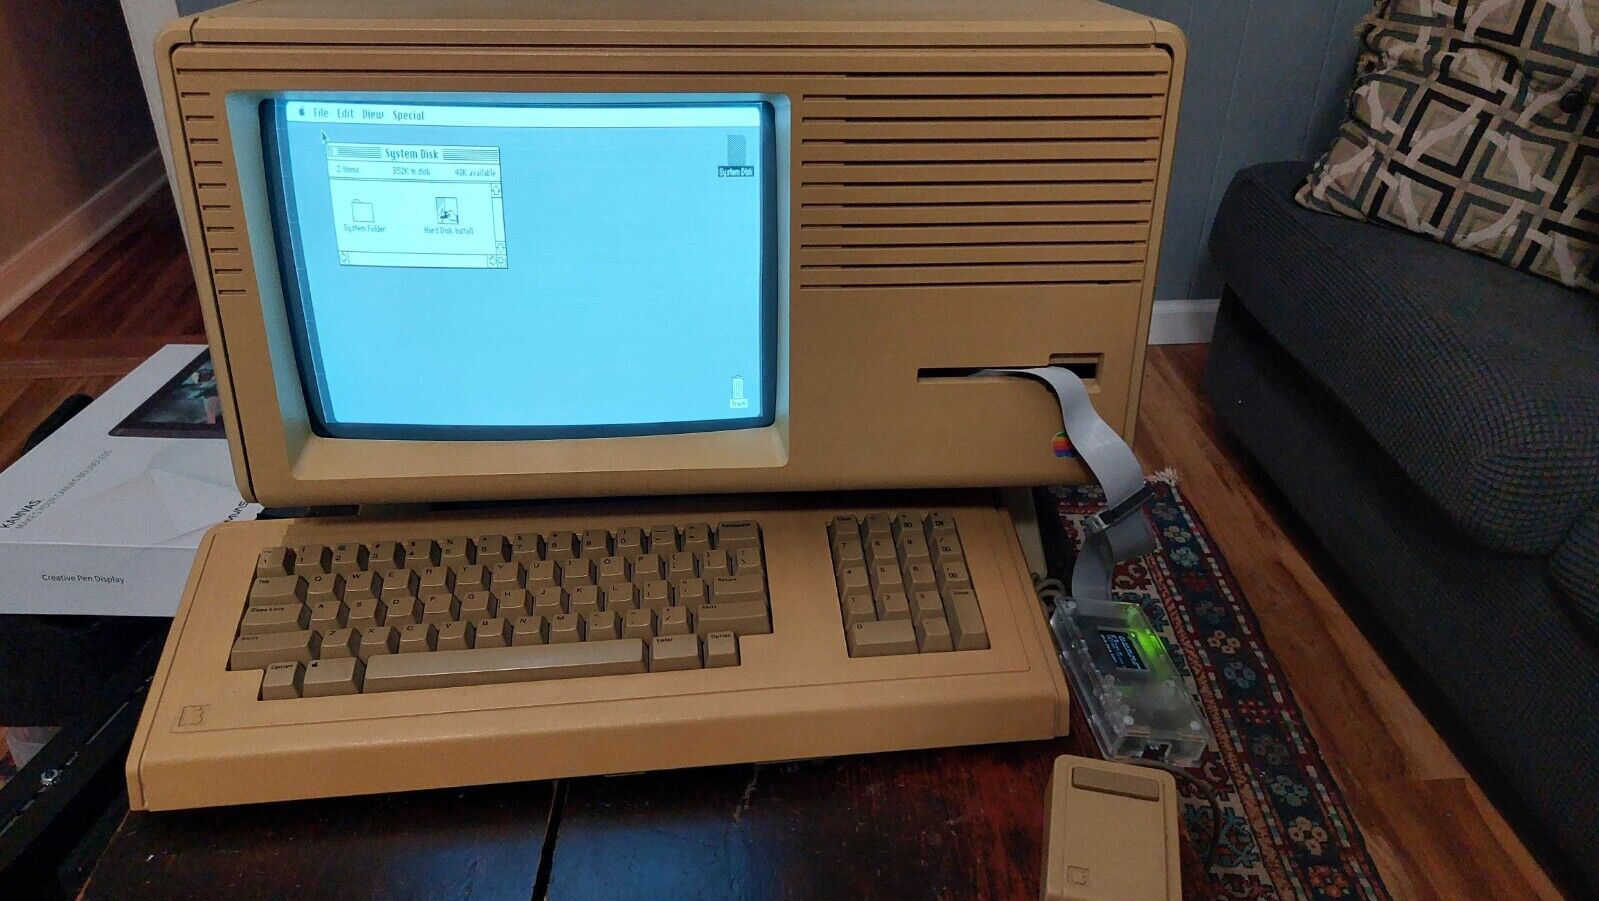 Apple Lisa 2/10 “Macintosh XL” Computer - boots into MacWorks